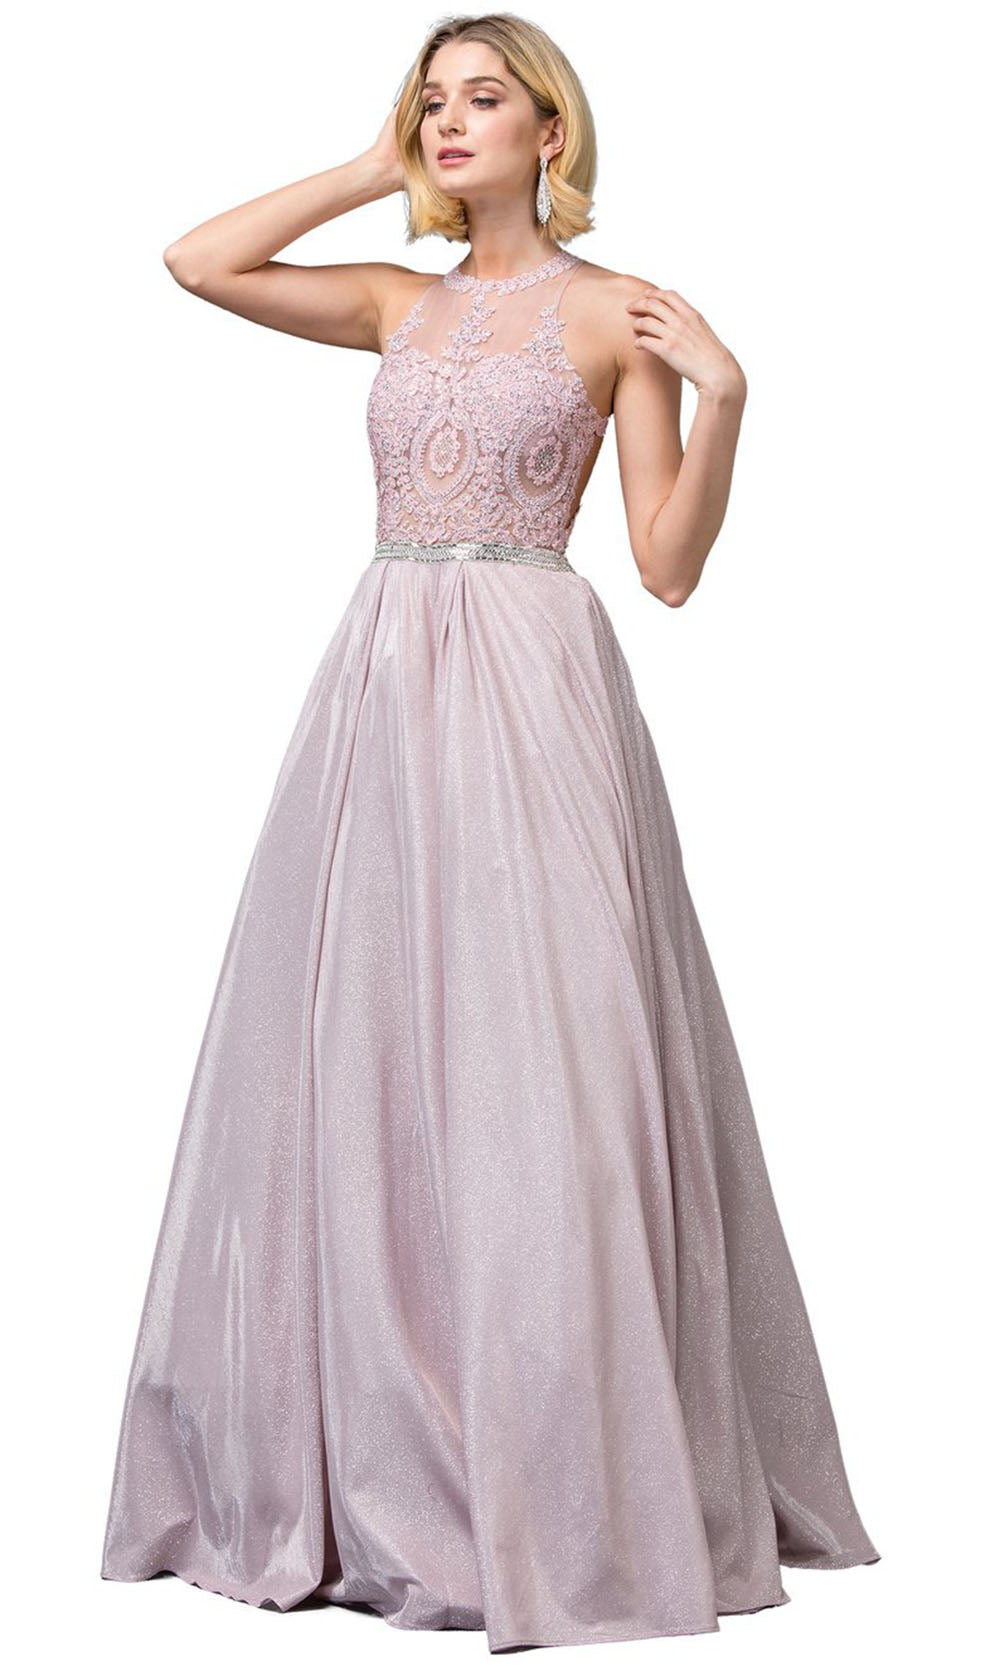 Dancing Queen - 2829 Grecian Halter Glitter A-Line Dress In Pink